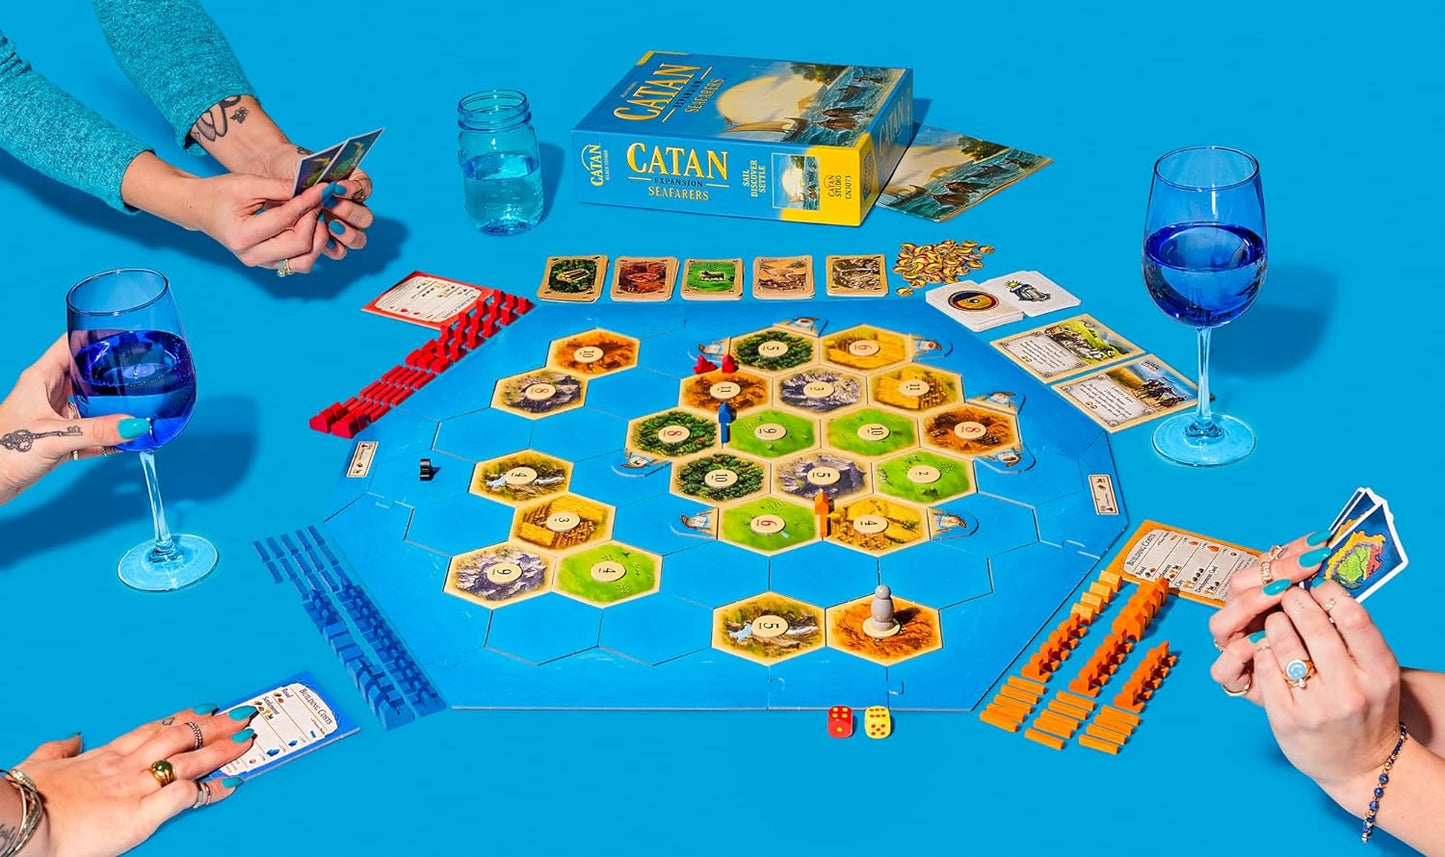 CATAN Seafarers Board Game Expansion